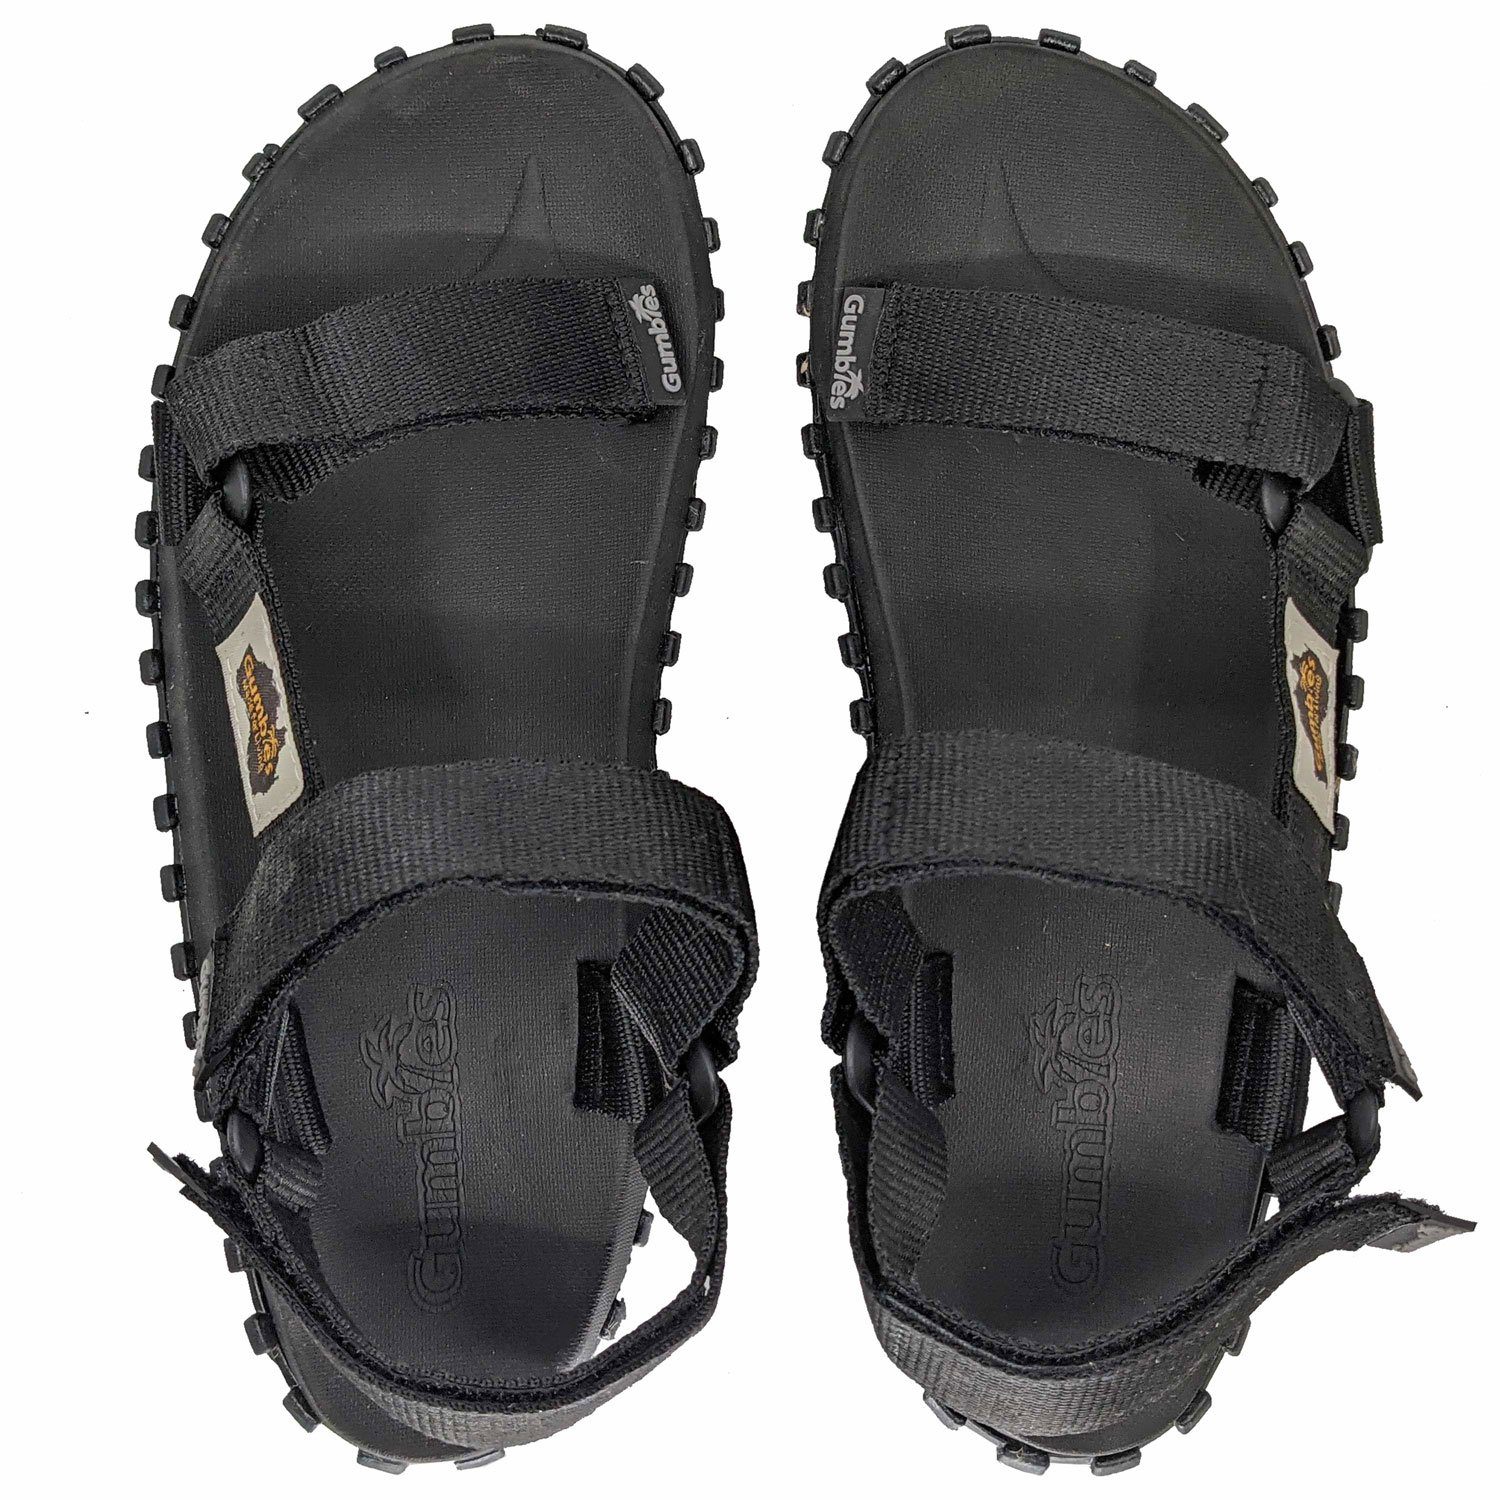 Schuhe  Gumbies Scrambler in Black Sandalette aus recycelten Materialien in farbenfrohen Designs